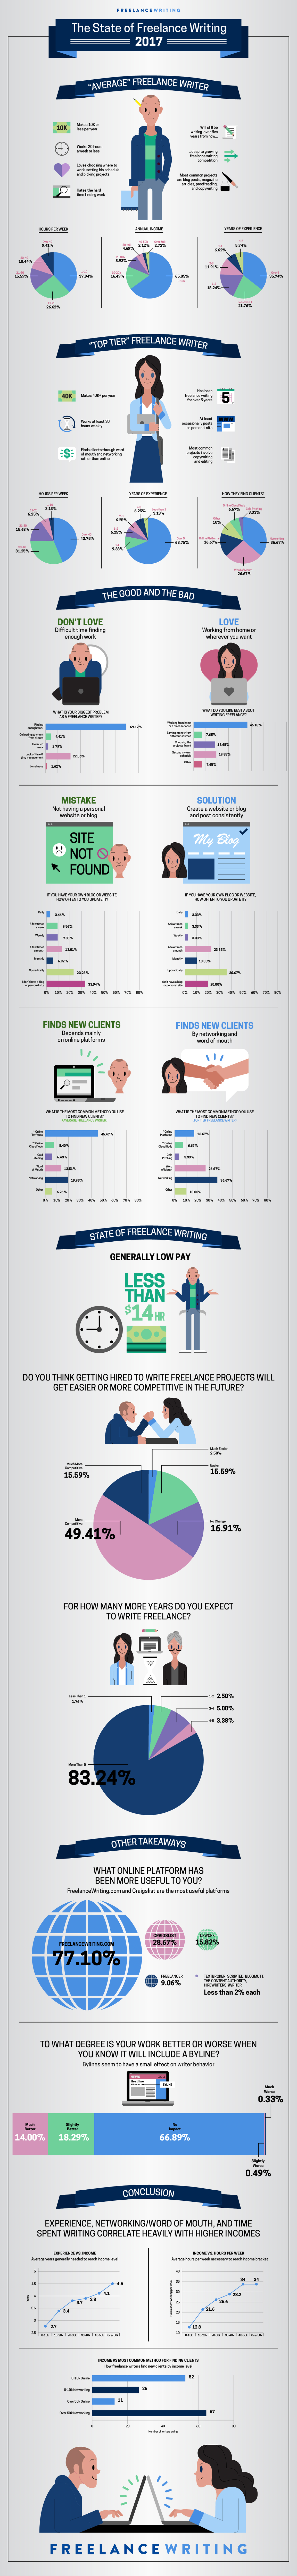 freelance writing infographic